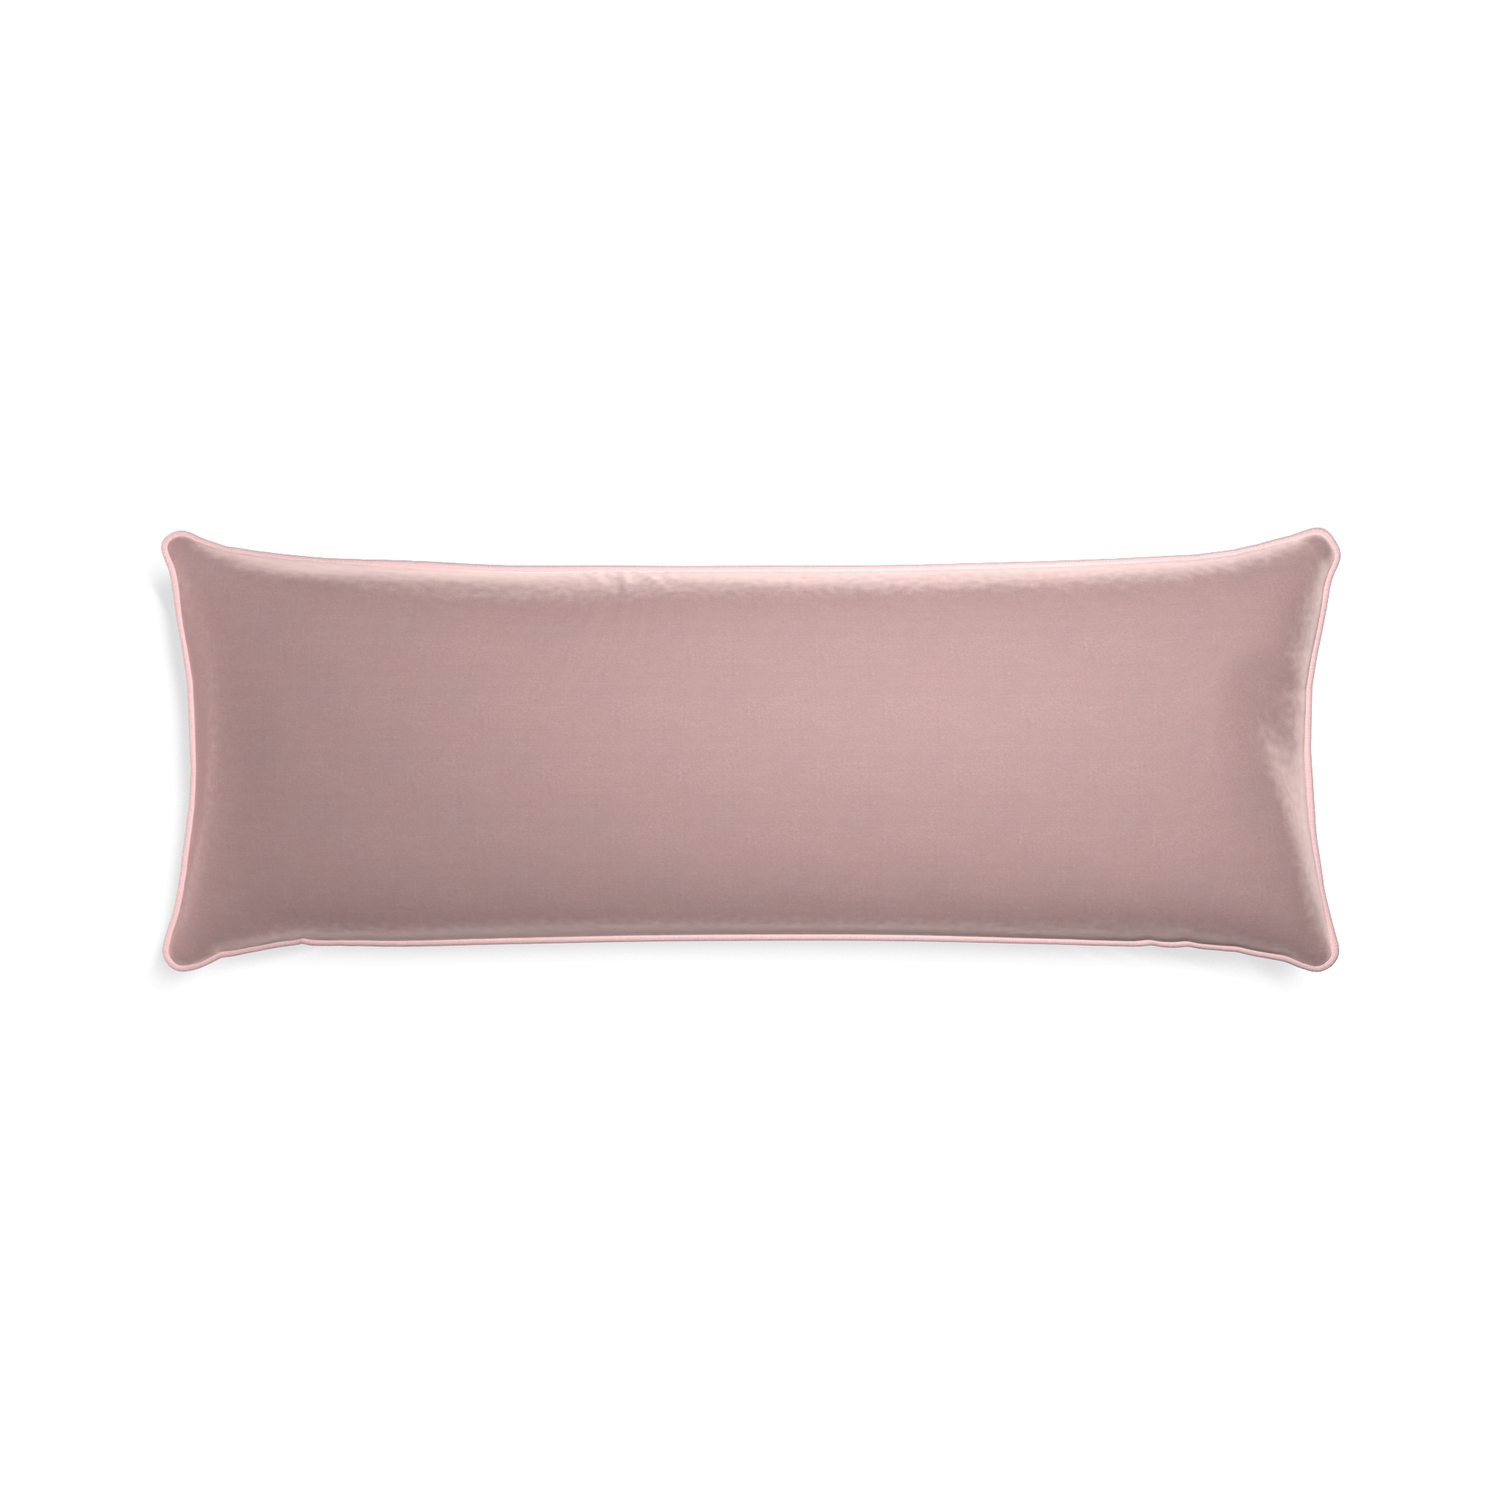 Xl-lumbar mauve velvet custom pillow with petal piping on white background